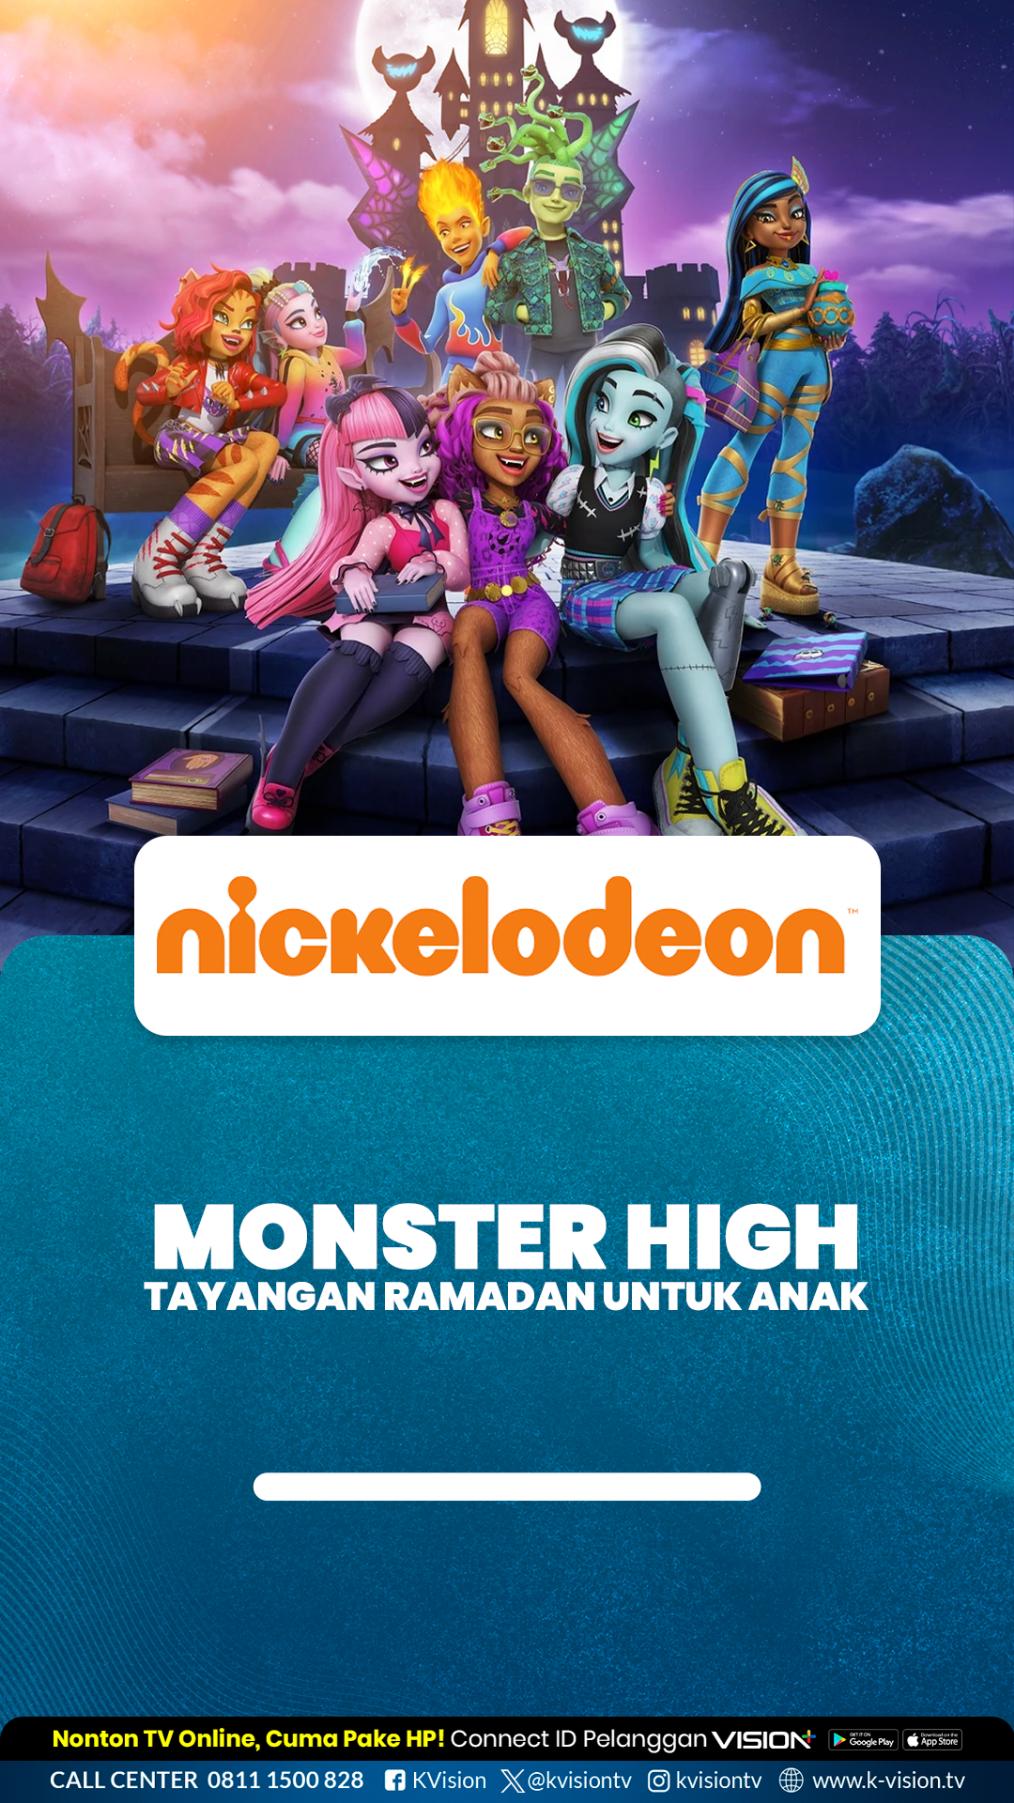 Temani Anakmu Dalam Ramadan dengan Menonton Tayangan Monster High